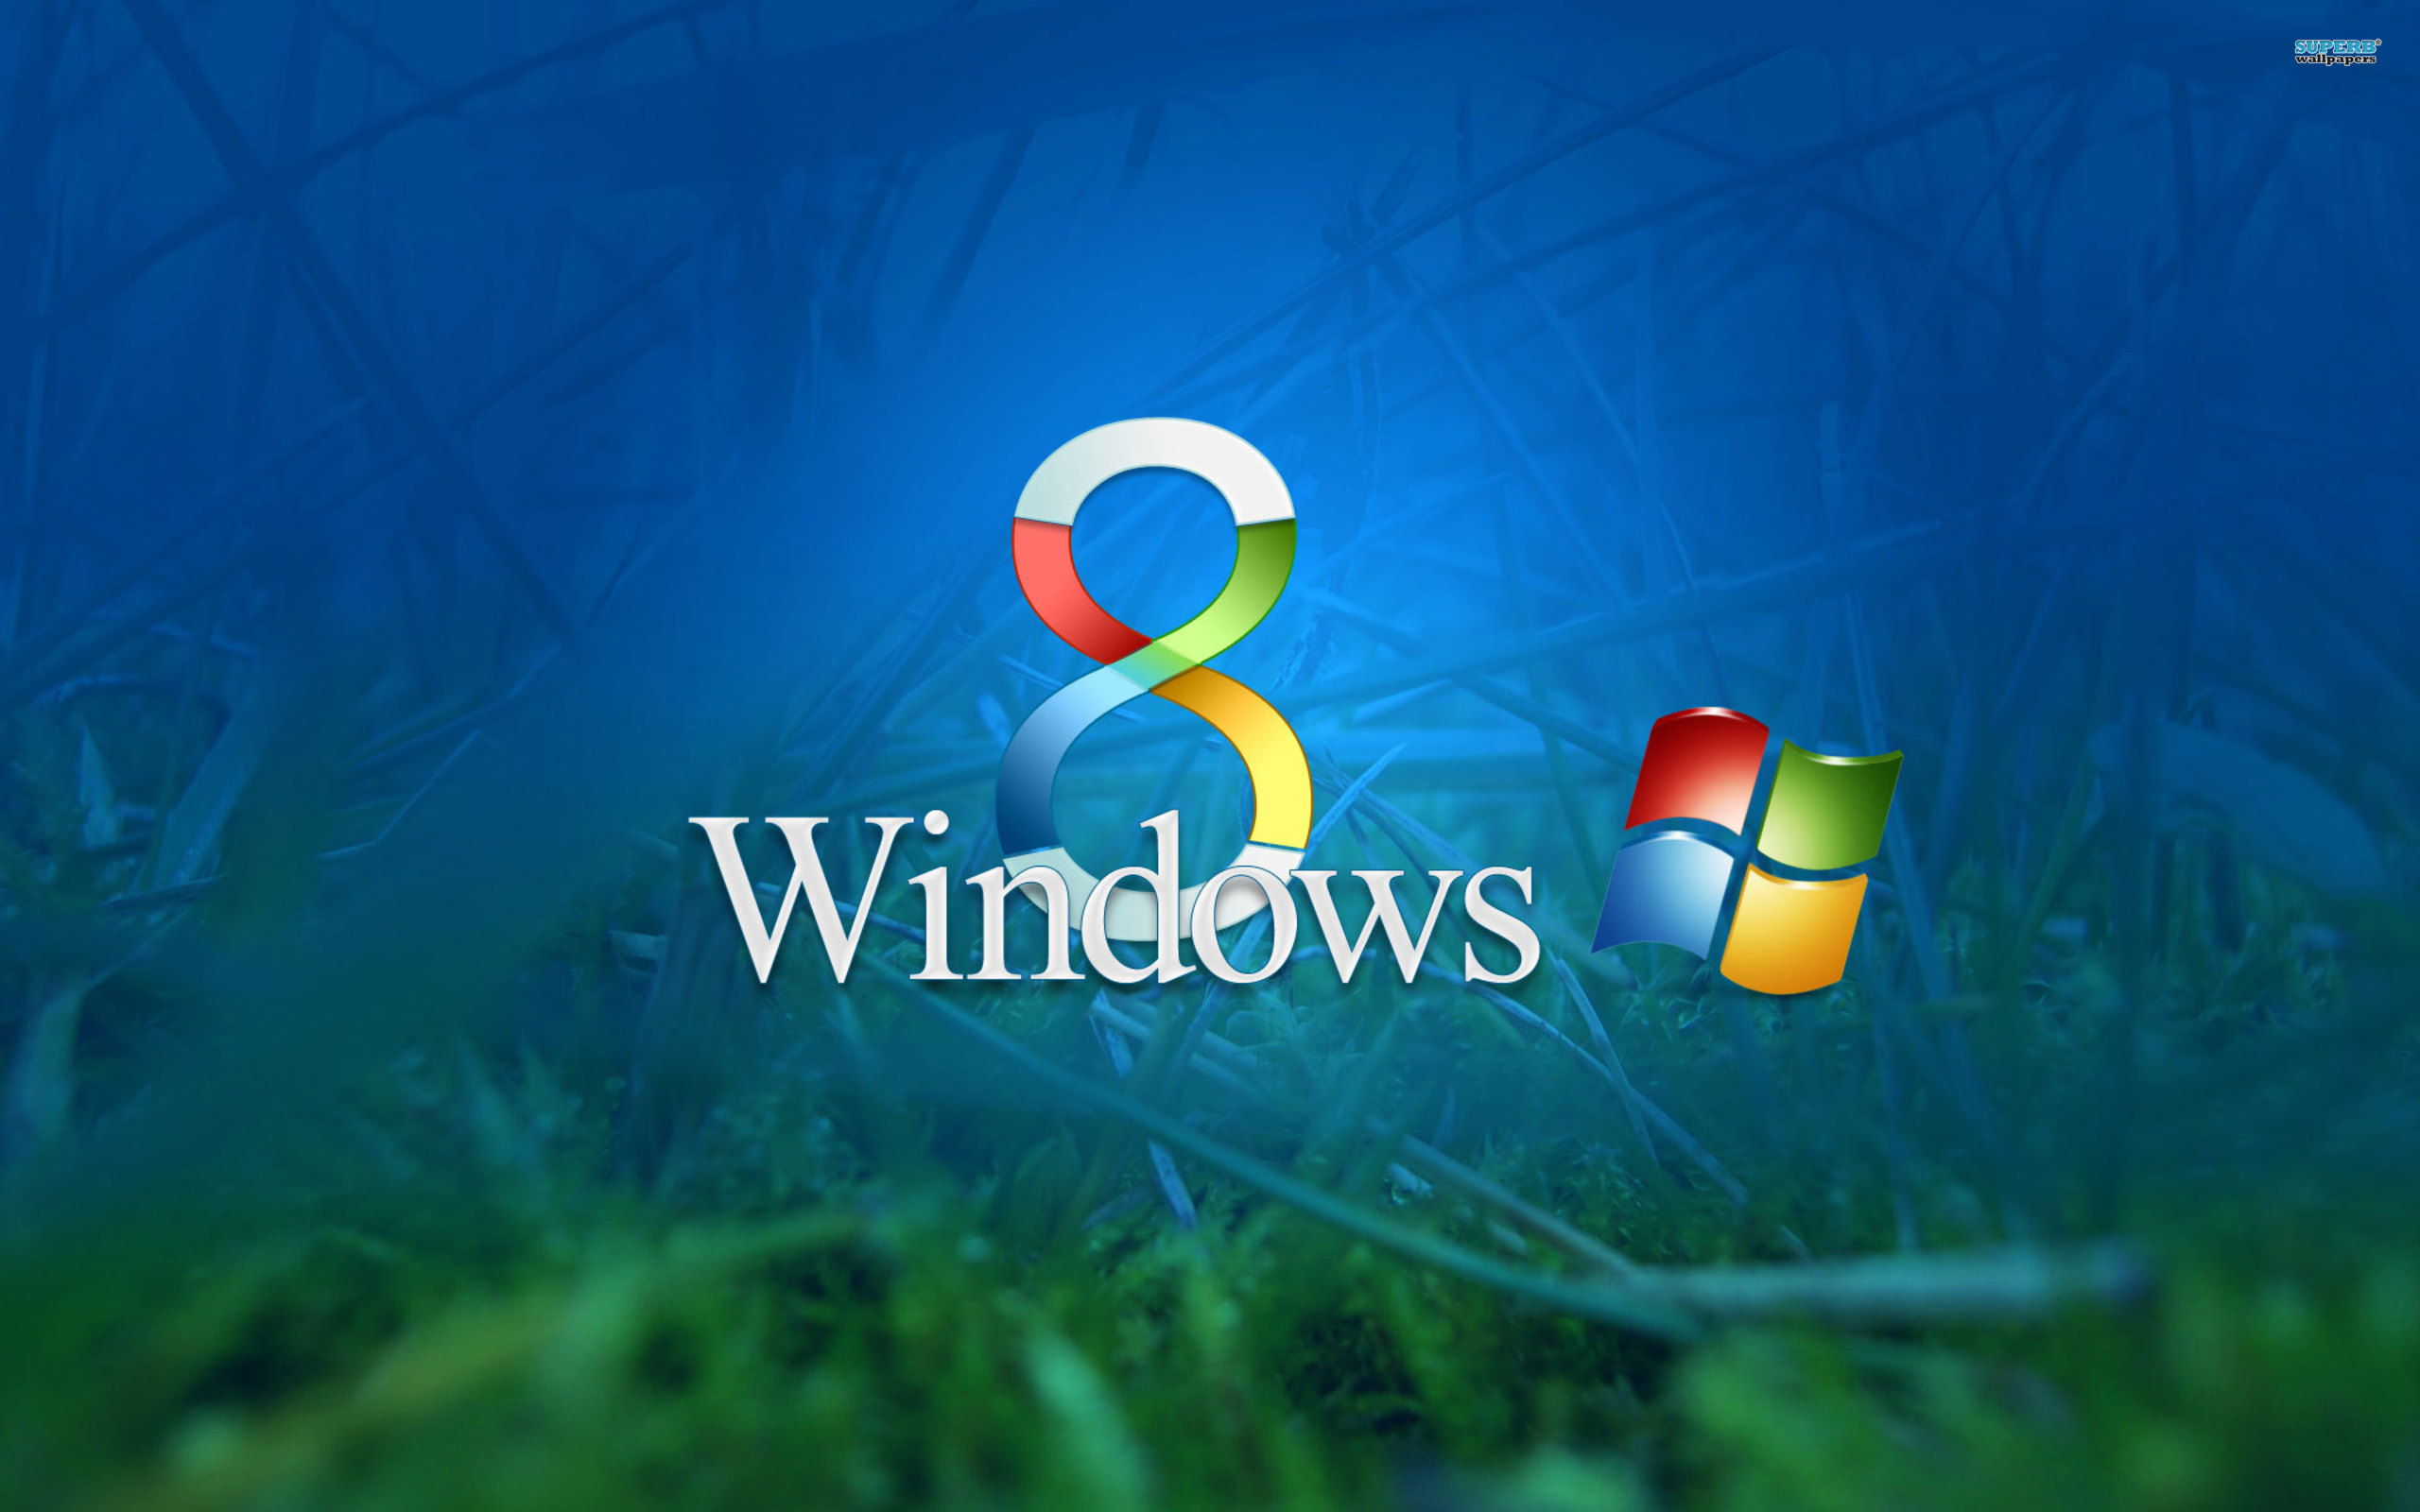 windows 8, windows, technology, microsoft